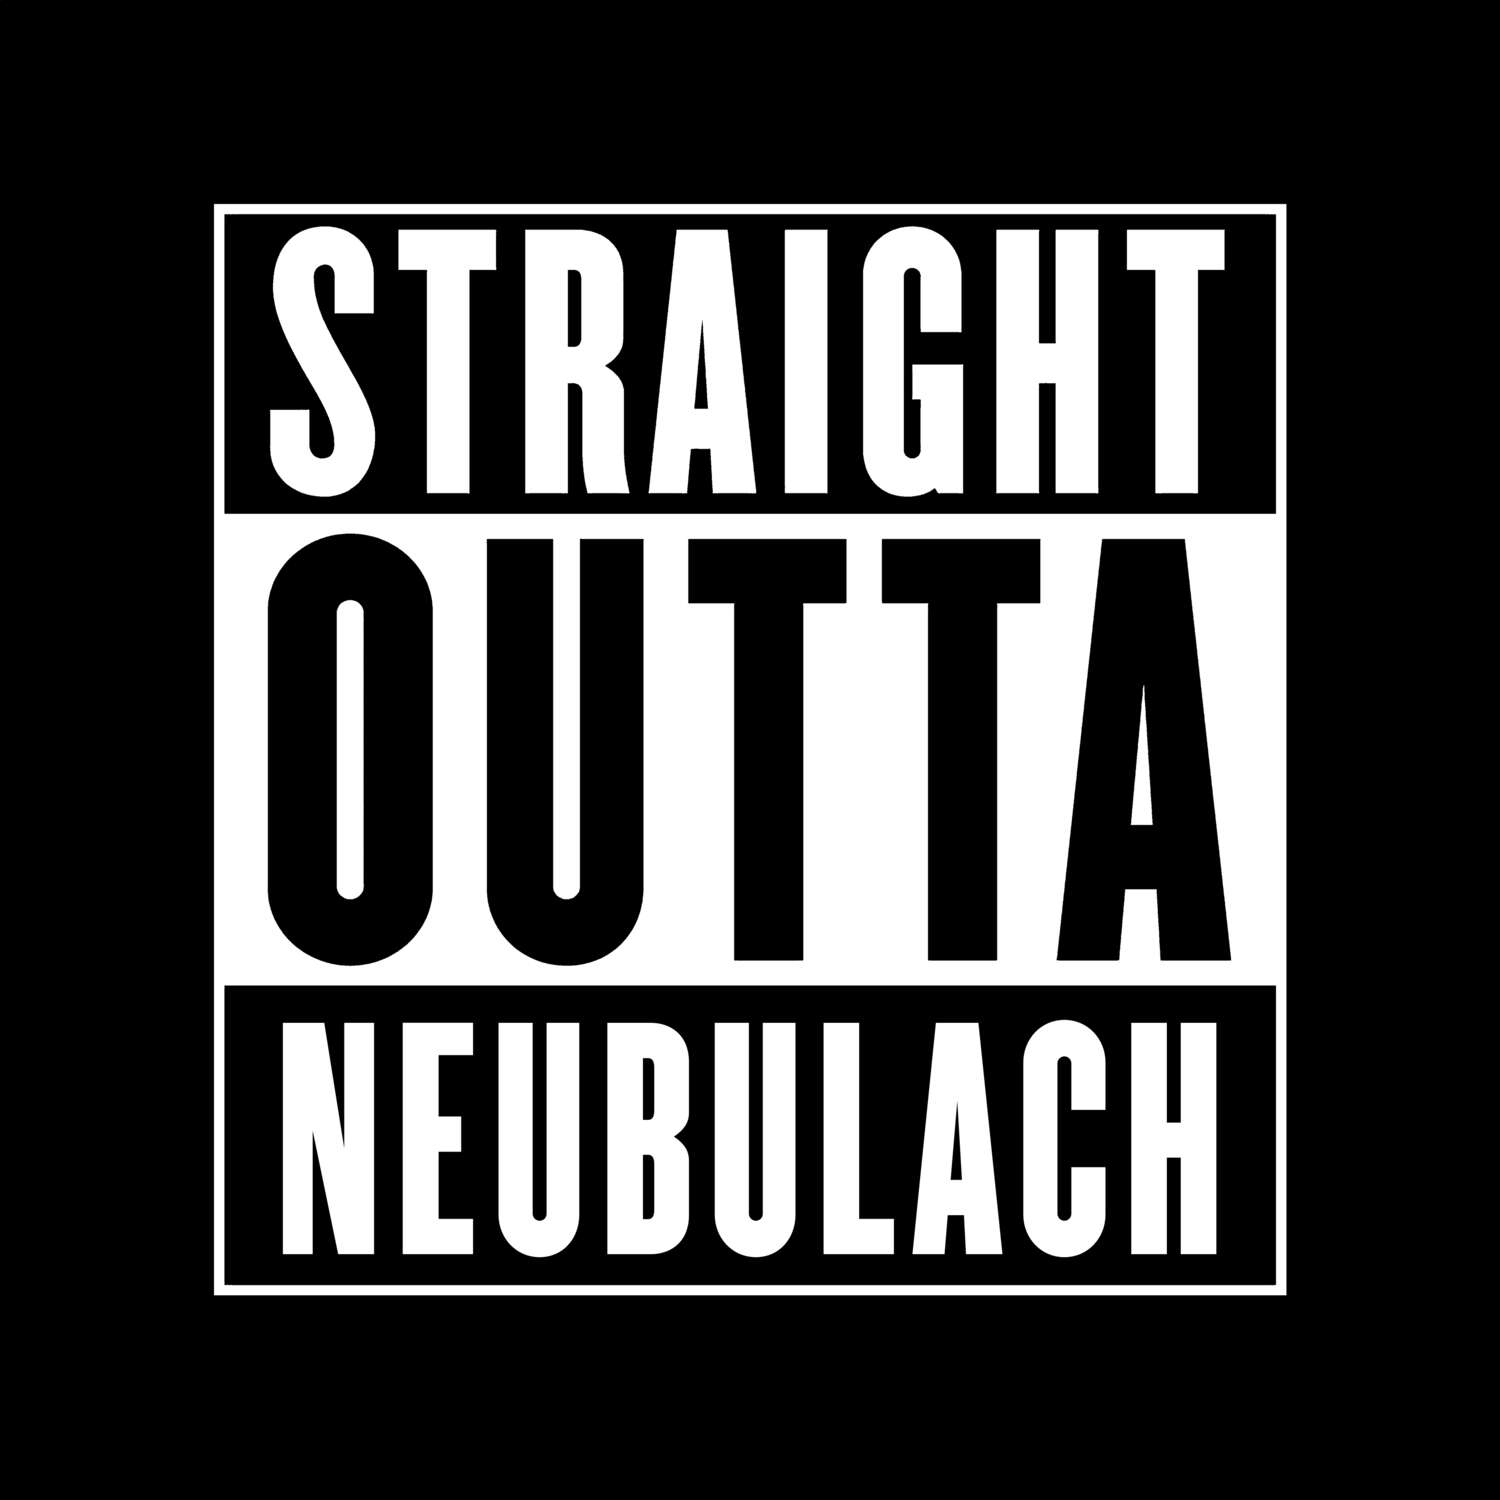 Neubulach T-Shirt »Straight Outta«